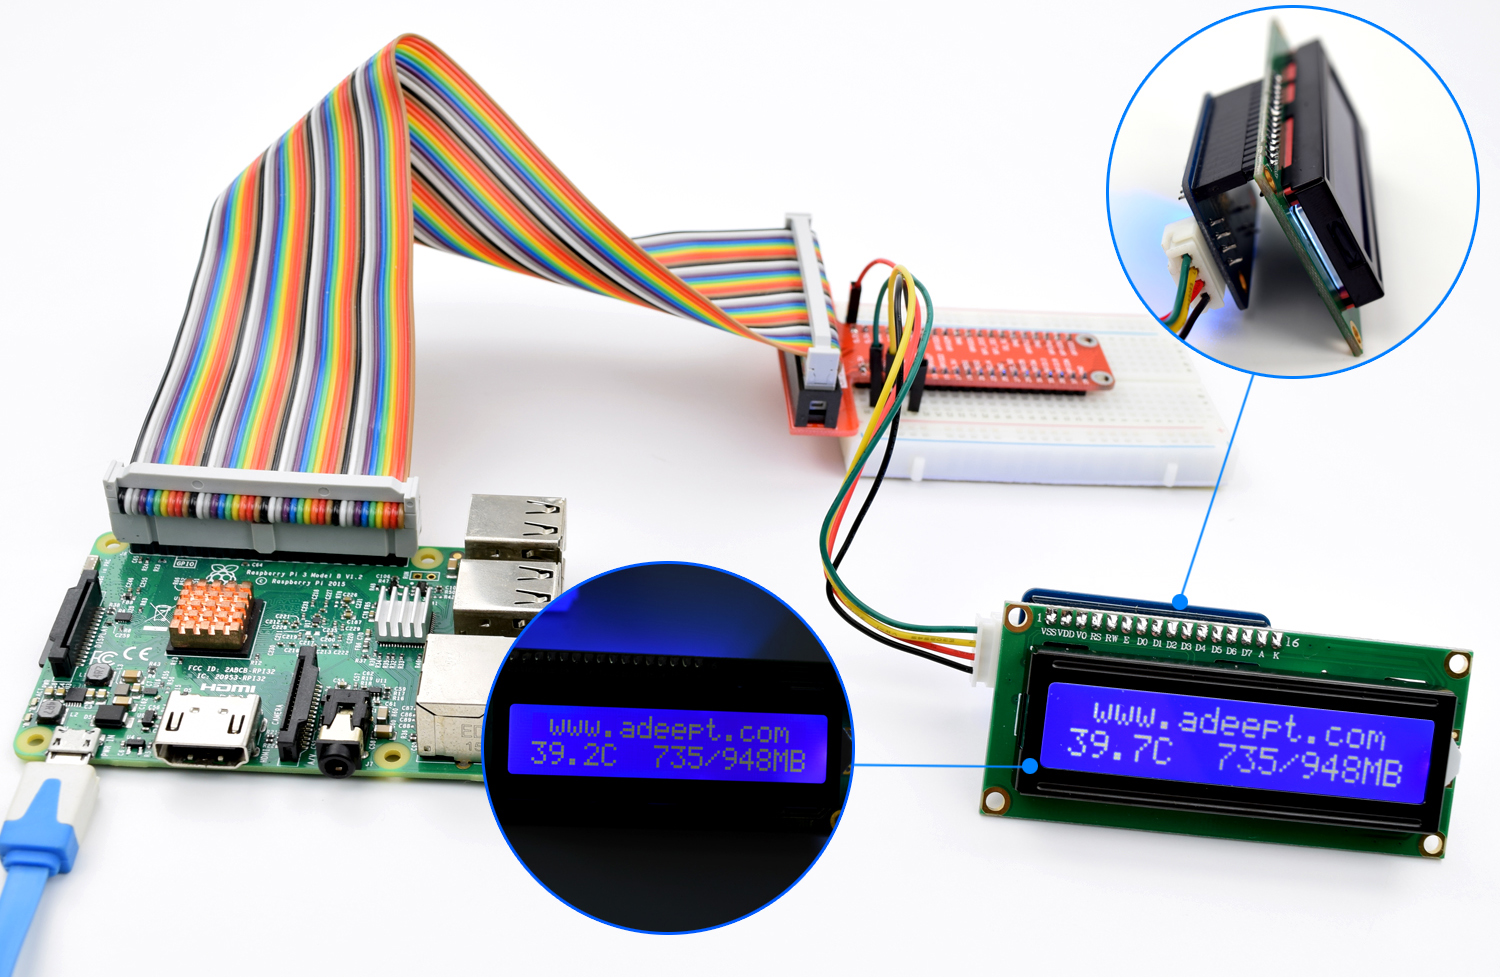 Adeept 46 Modules Sensor Kit for Raspberry Pi - Click to Enlarge